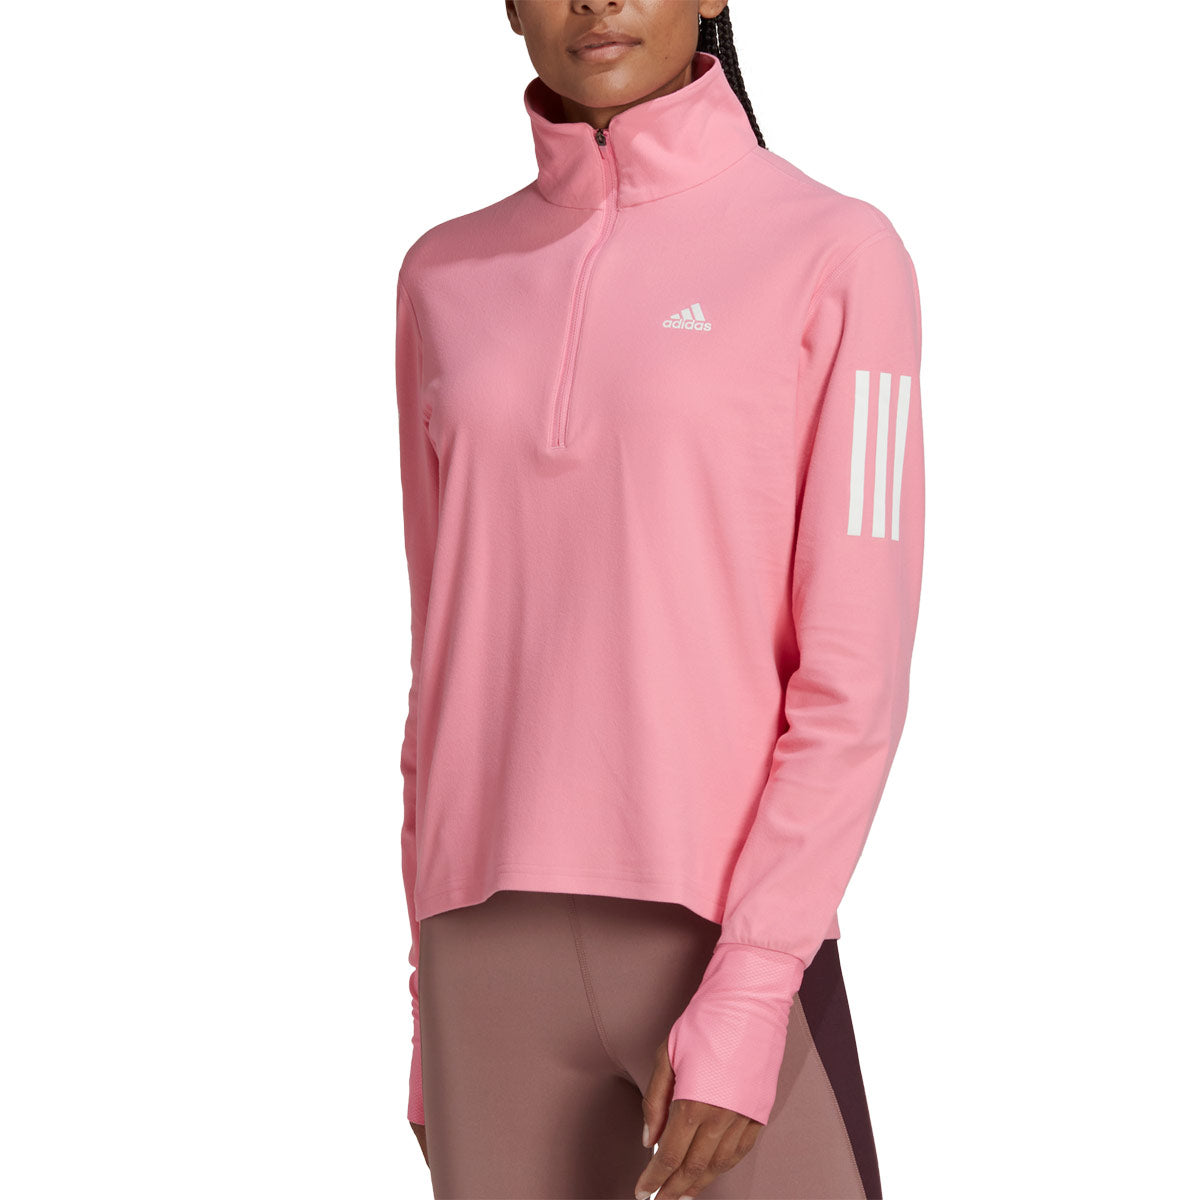 Adidas Women's Own the Run 1/2 Zip Long Sleeved Top